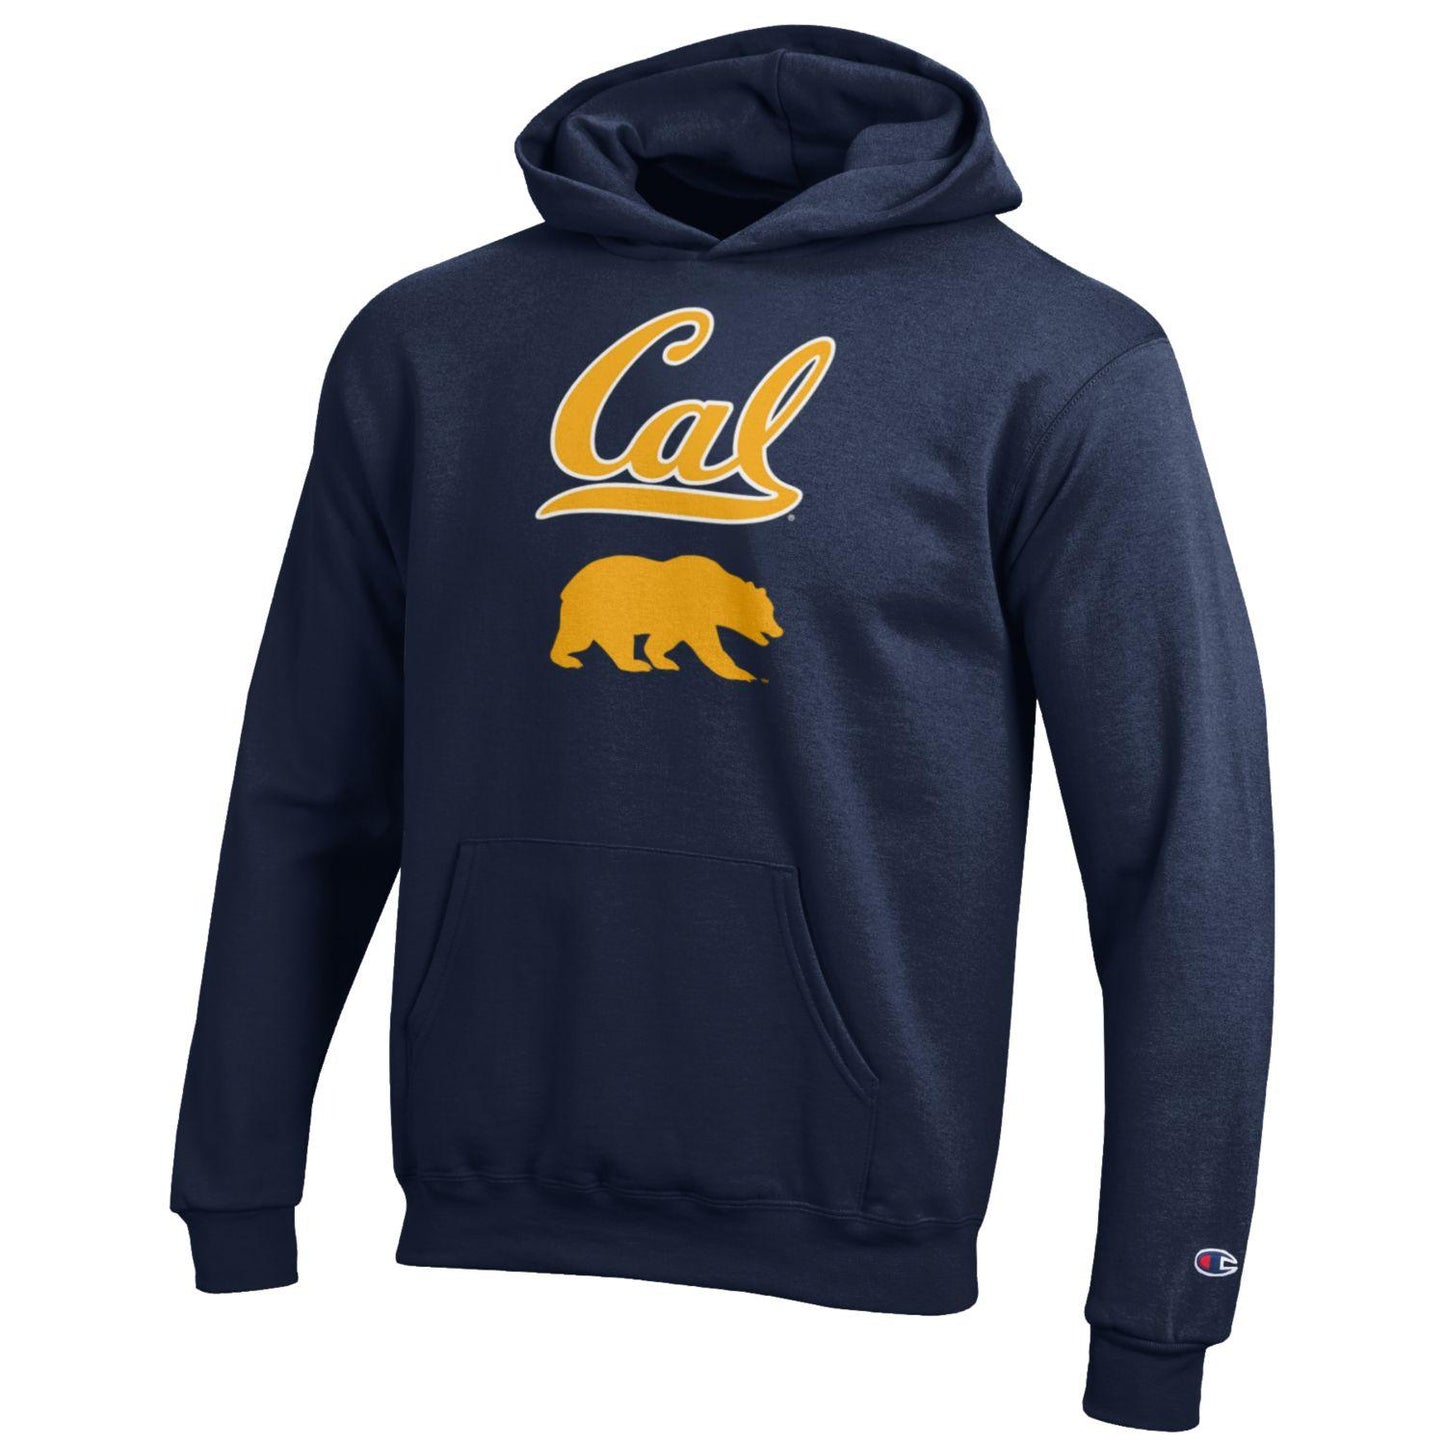 U.C. Berkeley Cal over Bear mascot youth hoodie sweatshirt-Navy-Shop College Wear